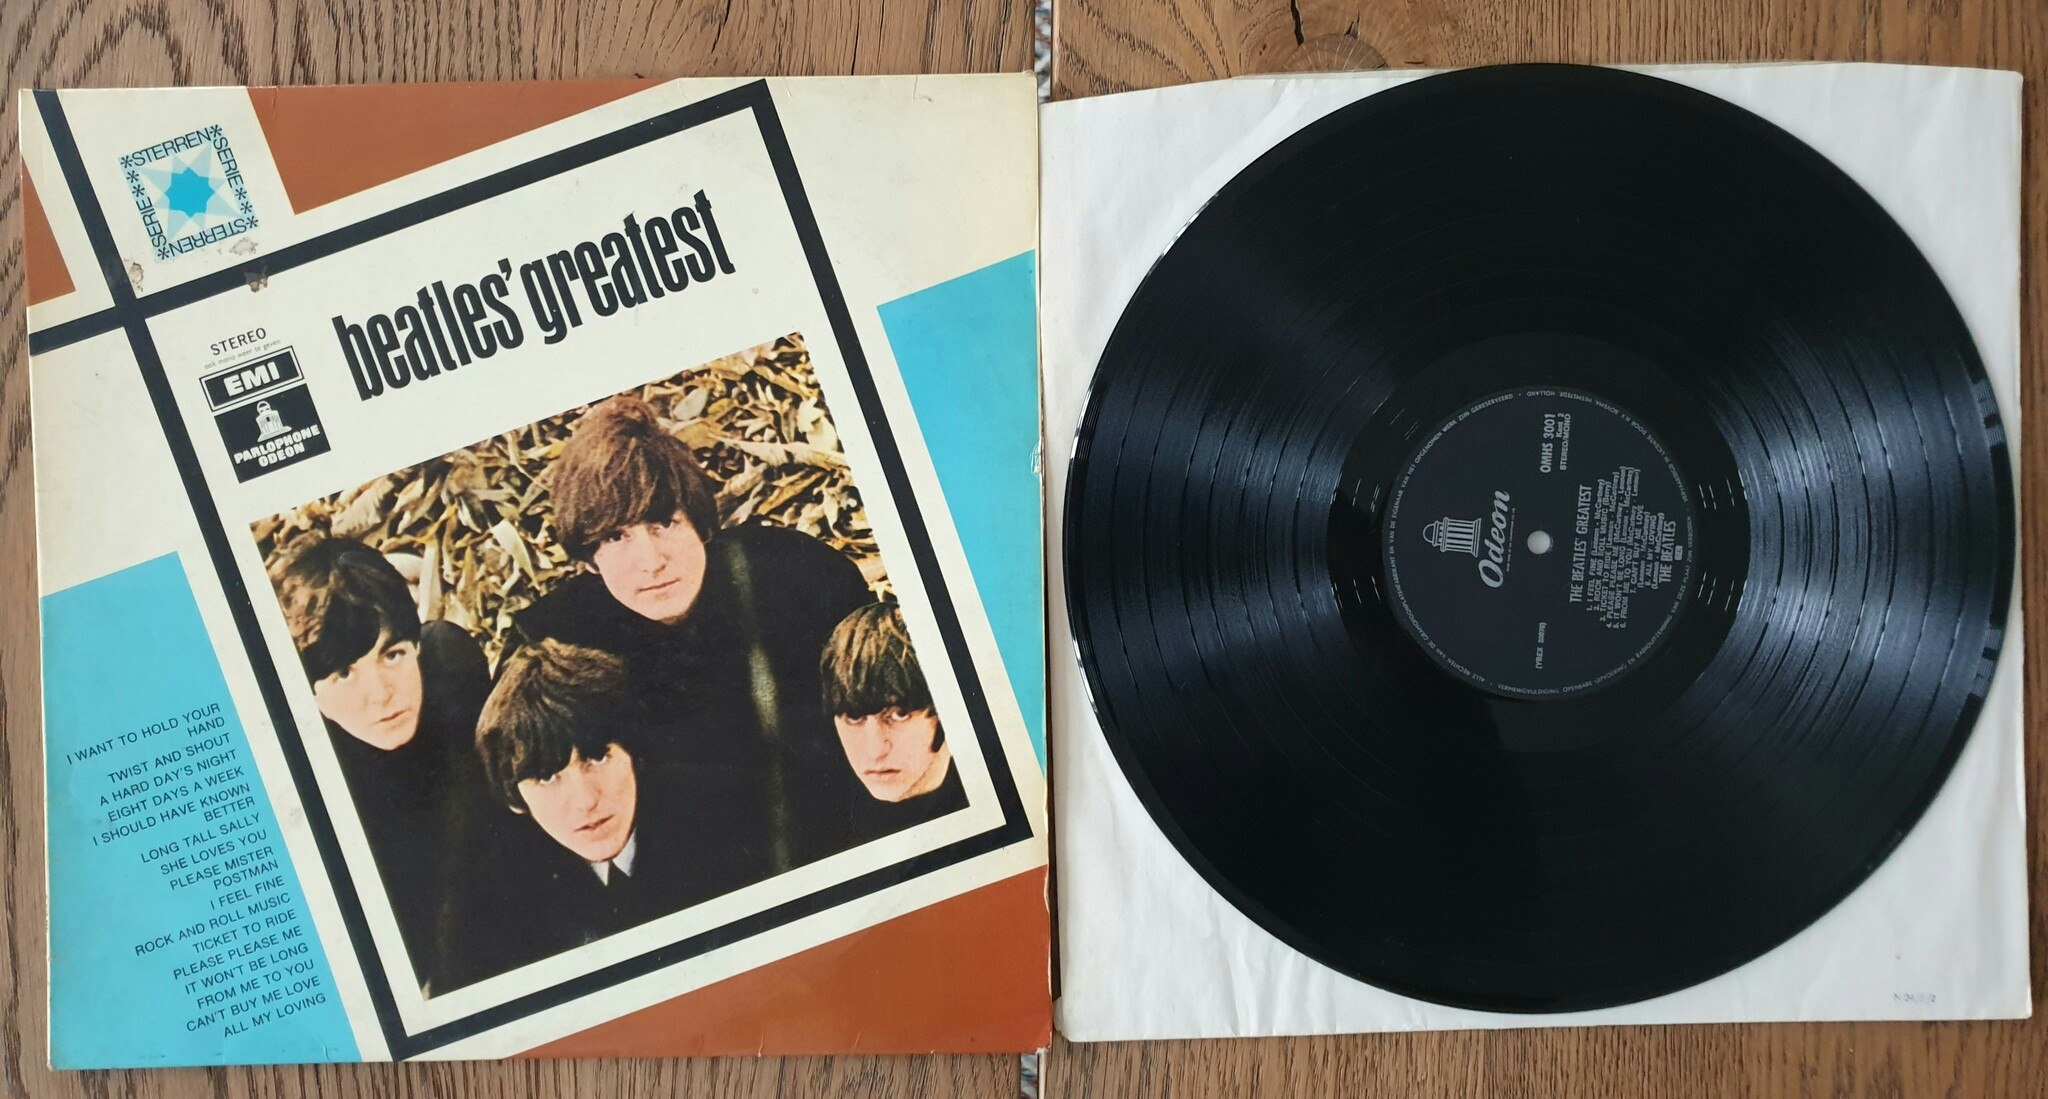 The Beatles, The Beatles Greatest. Vinyl LP